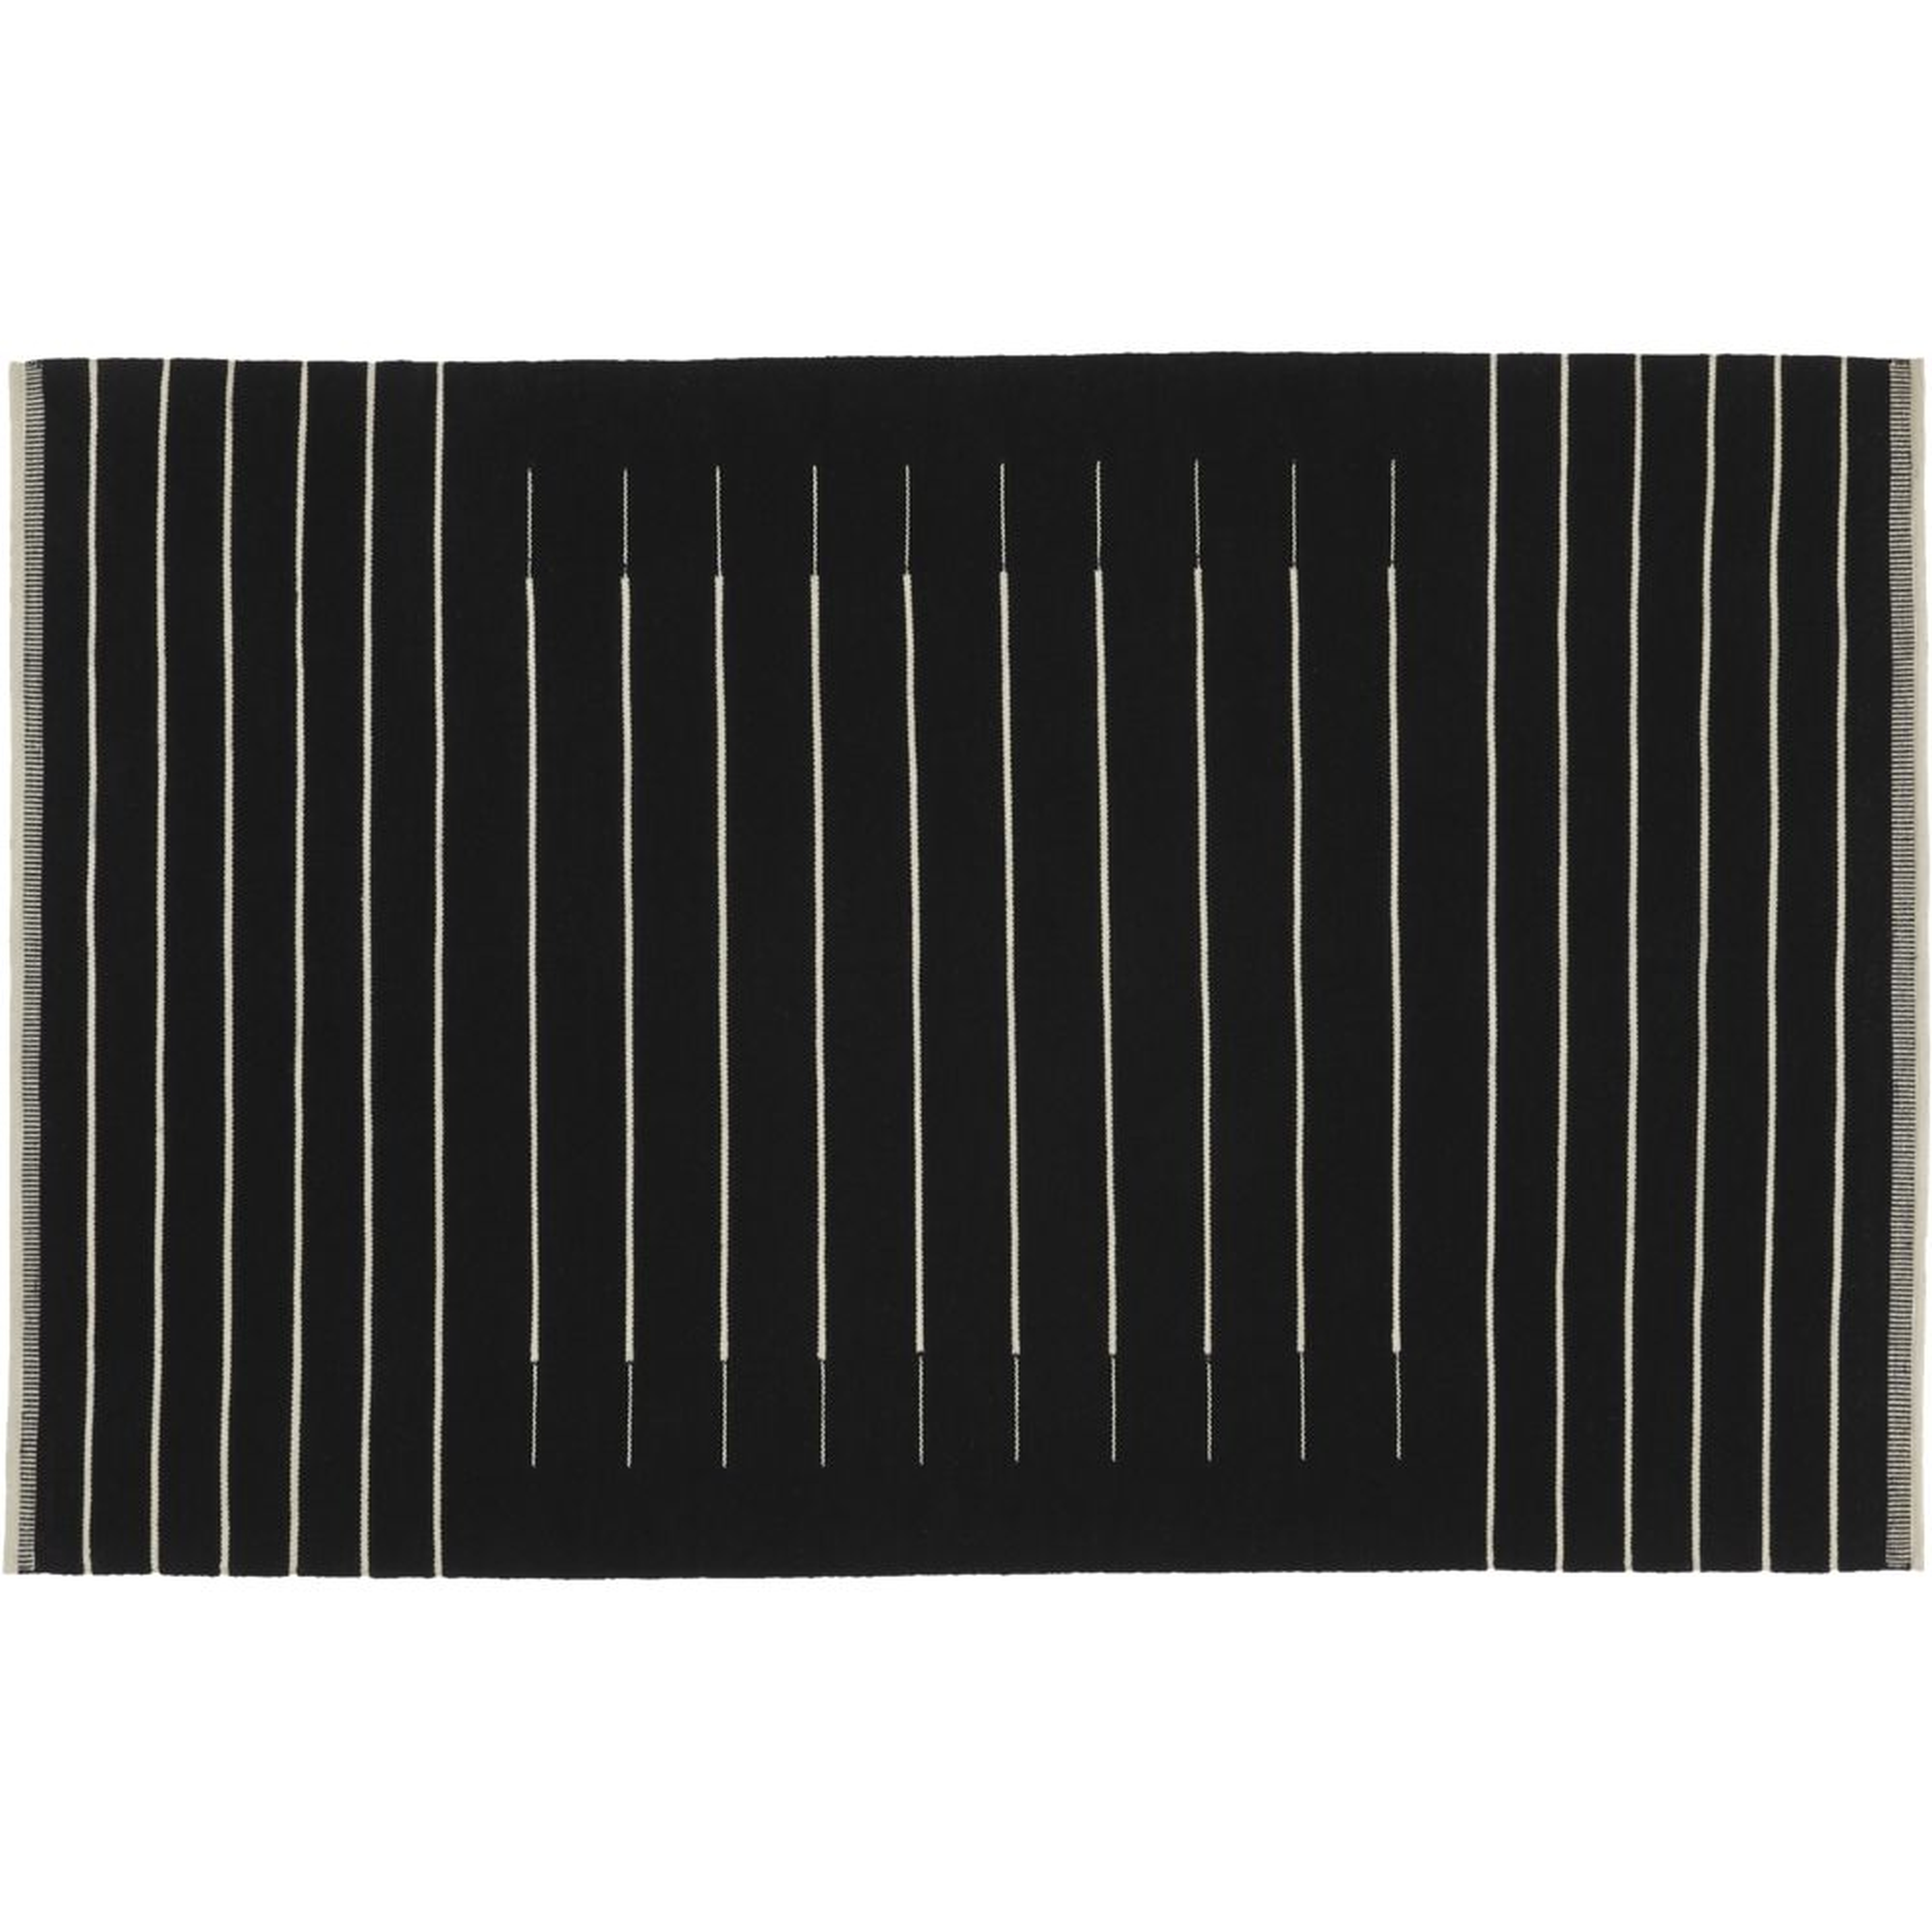 black with white stripe rug - 6'x9' - CB2